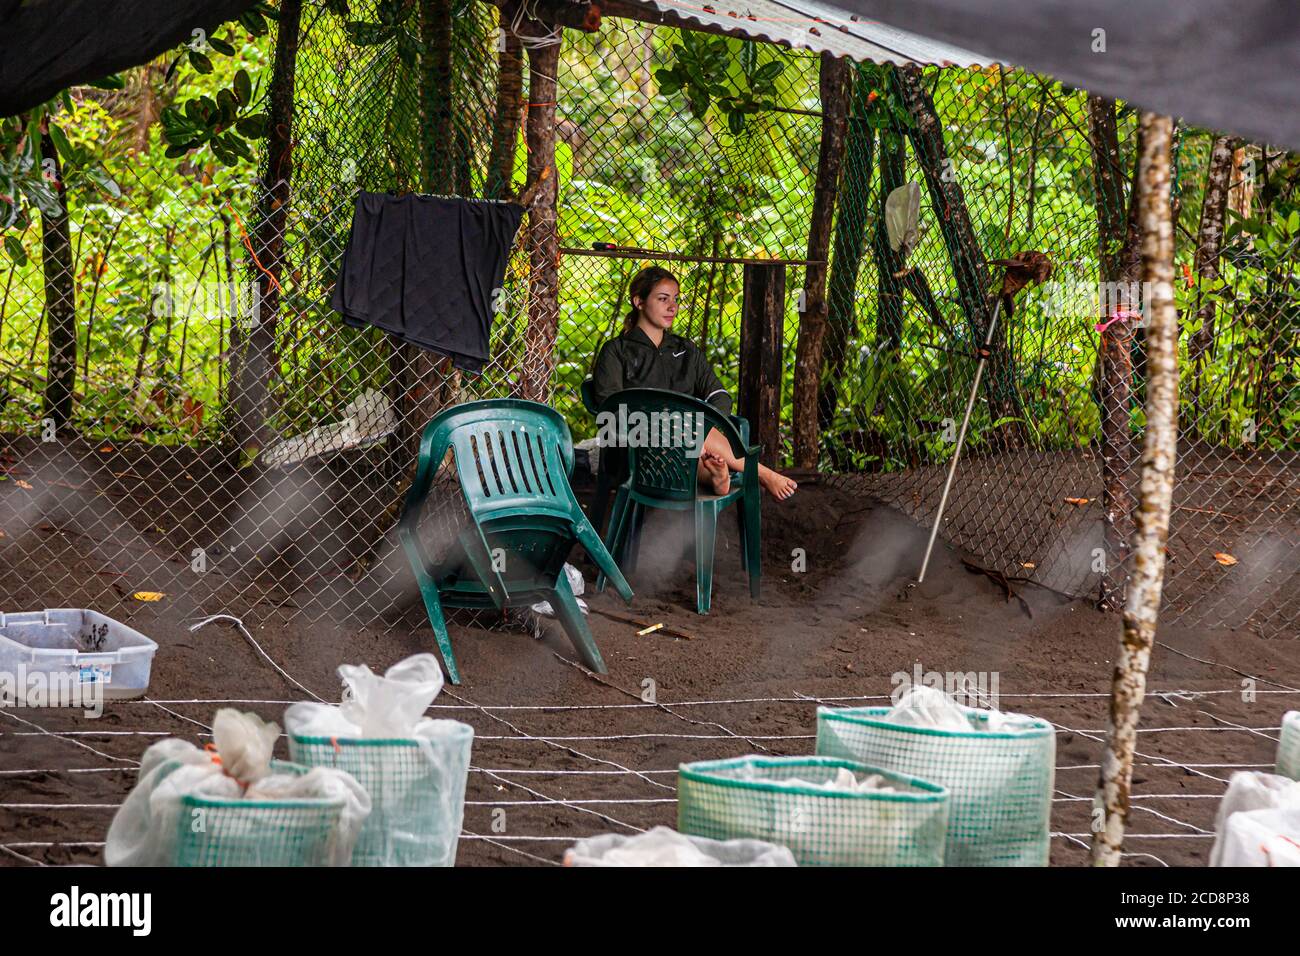 Hatchery of Biosphere Citizen Scientist Project Camp to save Sea Turtles in Reventazón, Costa Rica Stock Photo